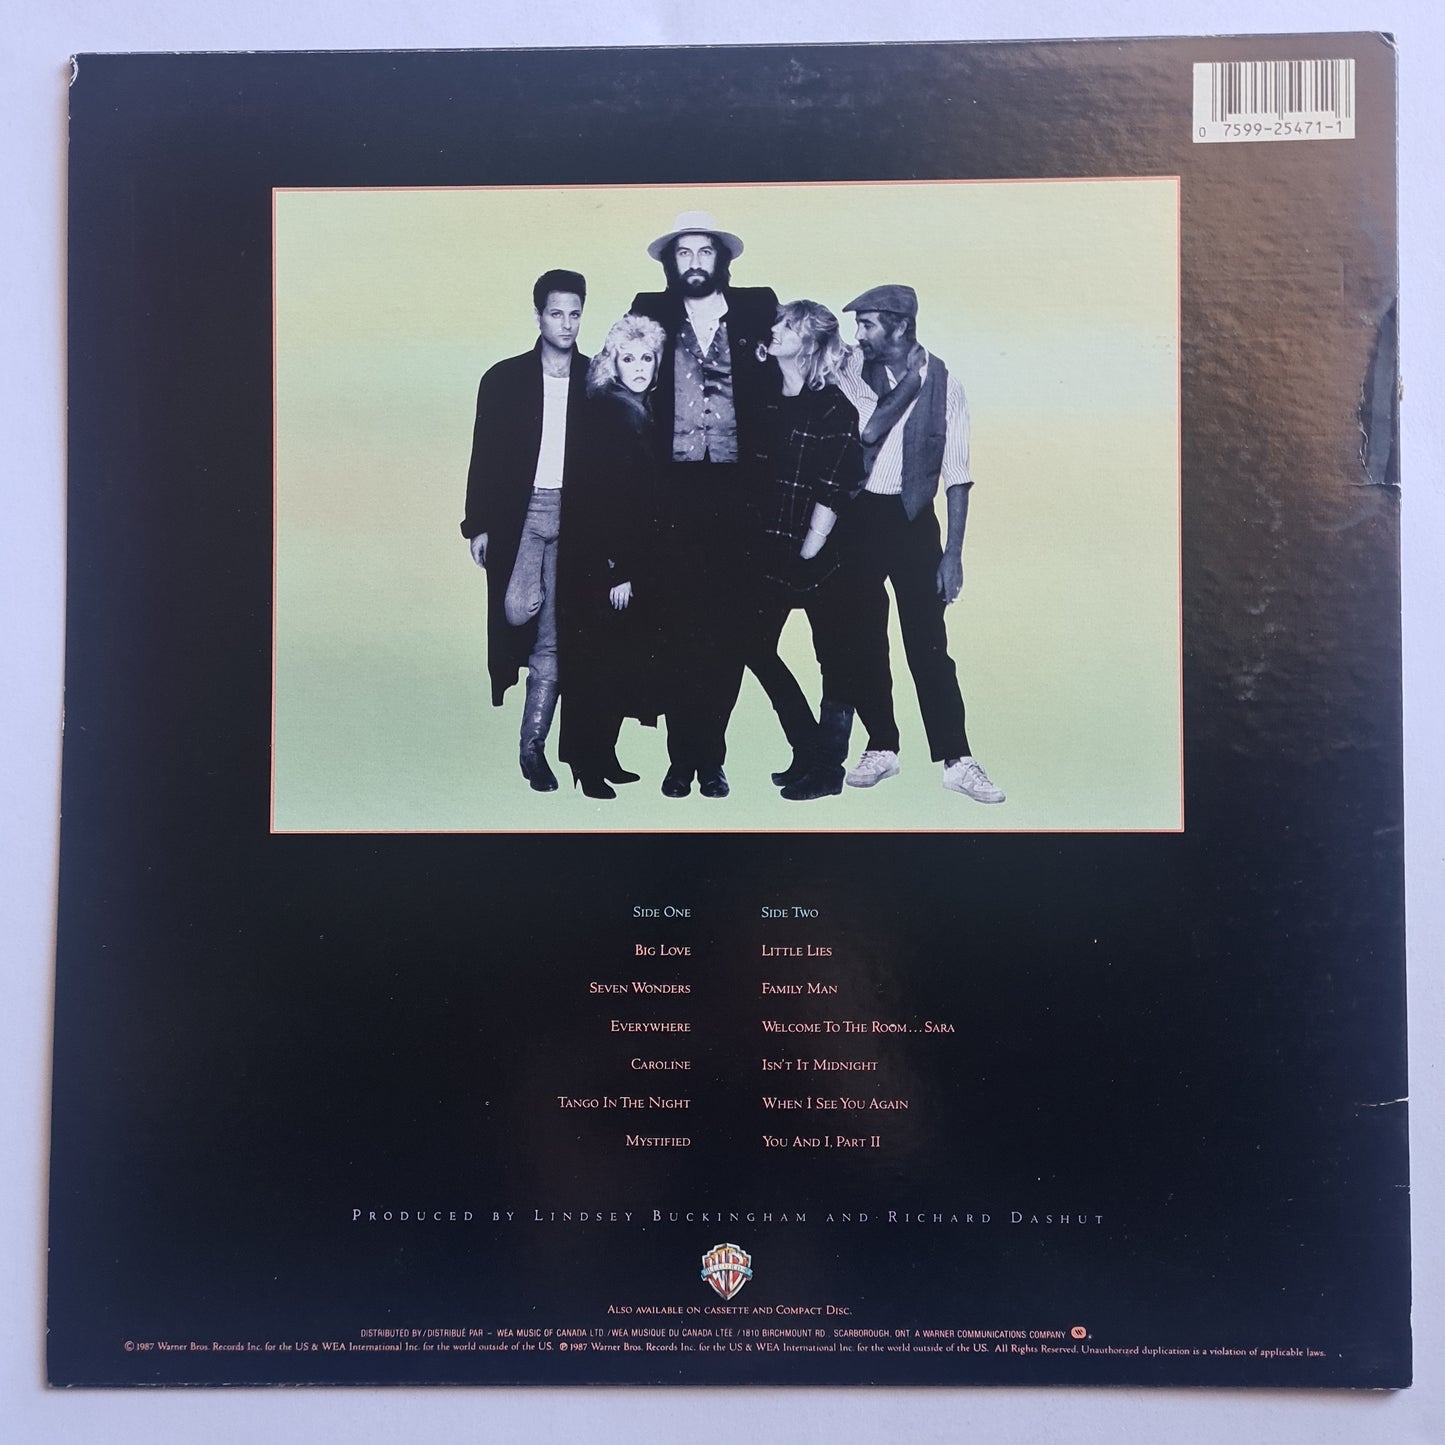 Fleetwood Mac – Tango In The Night- 1987 - Vinyl Record